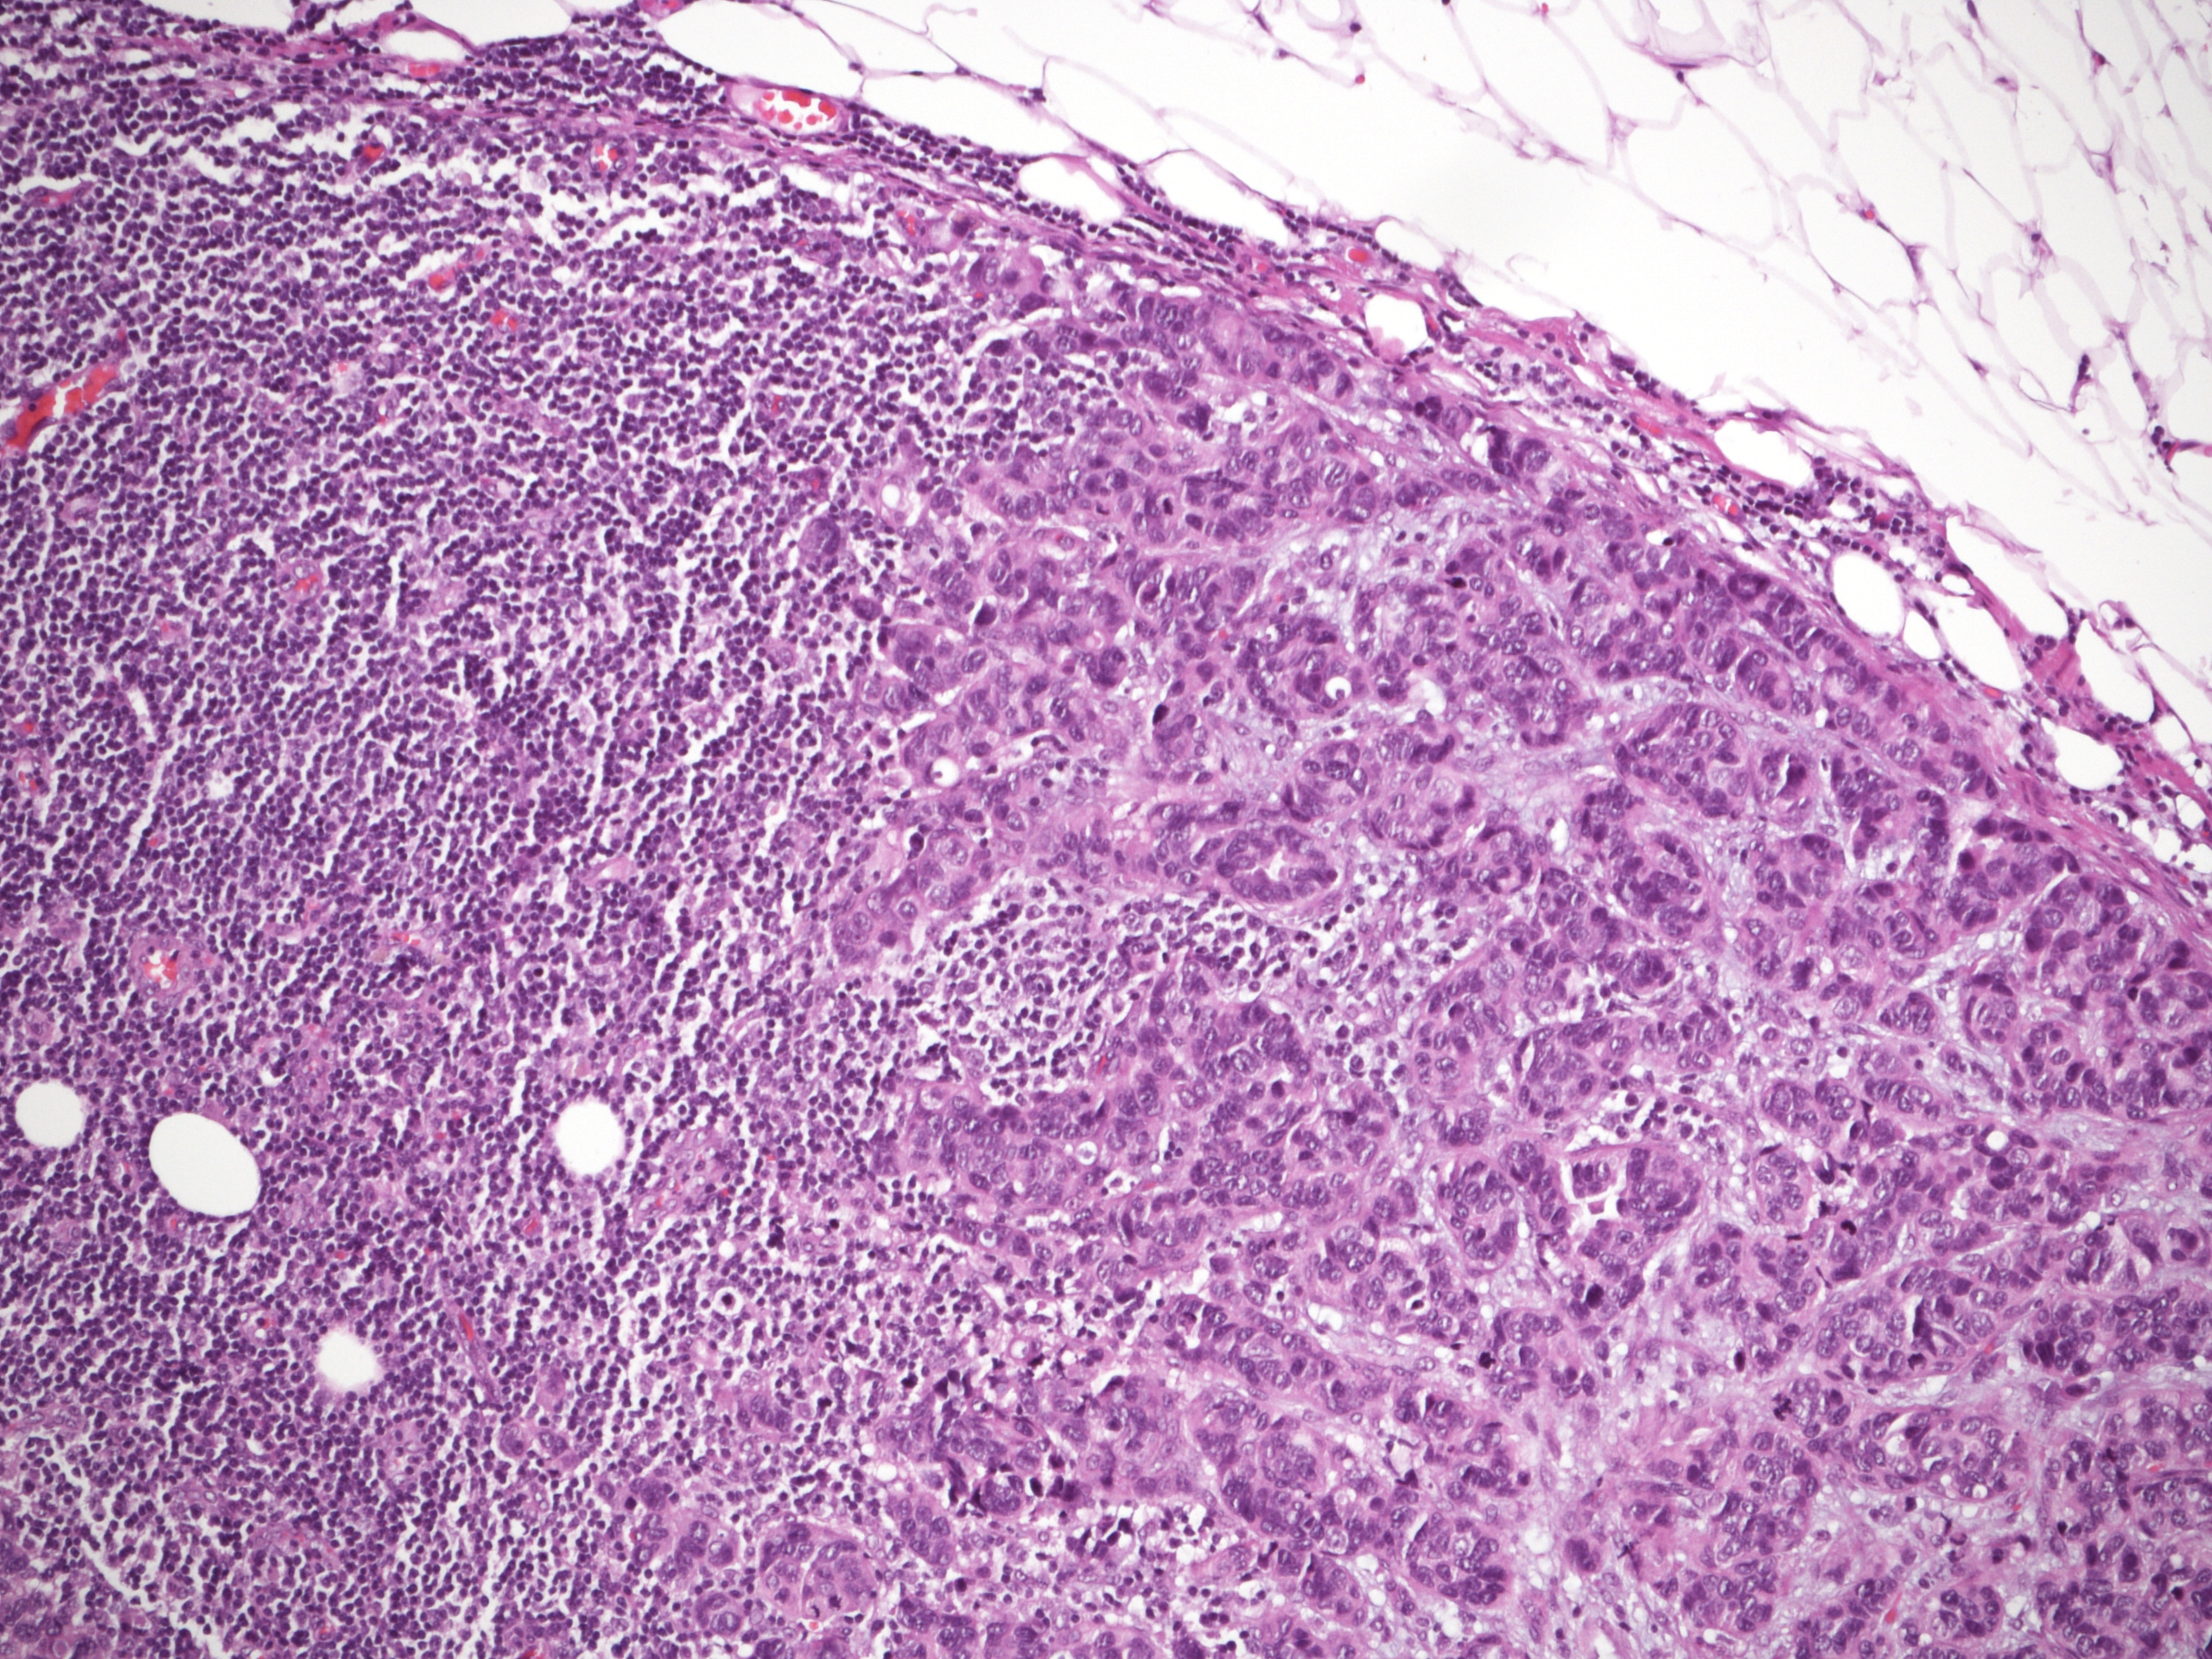 Colorectal cancer lymph nodes. Save citation to file